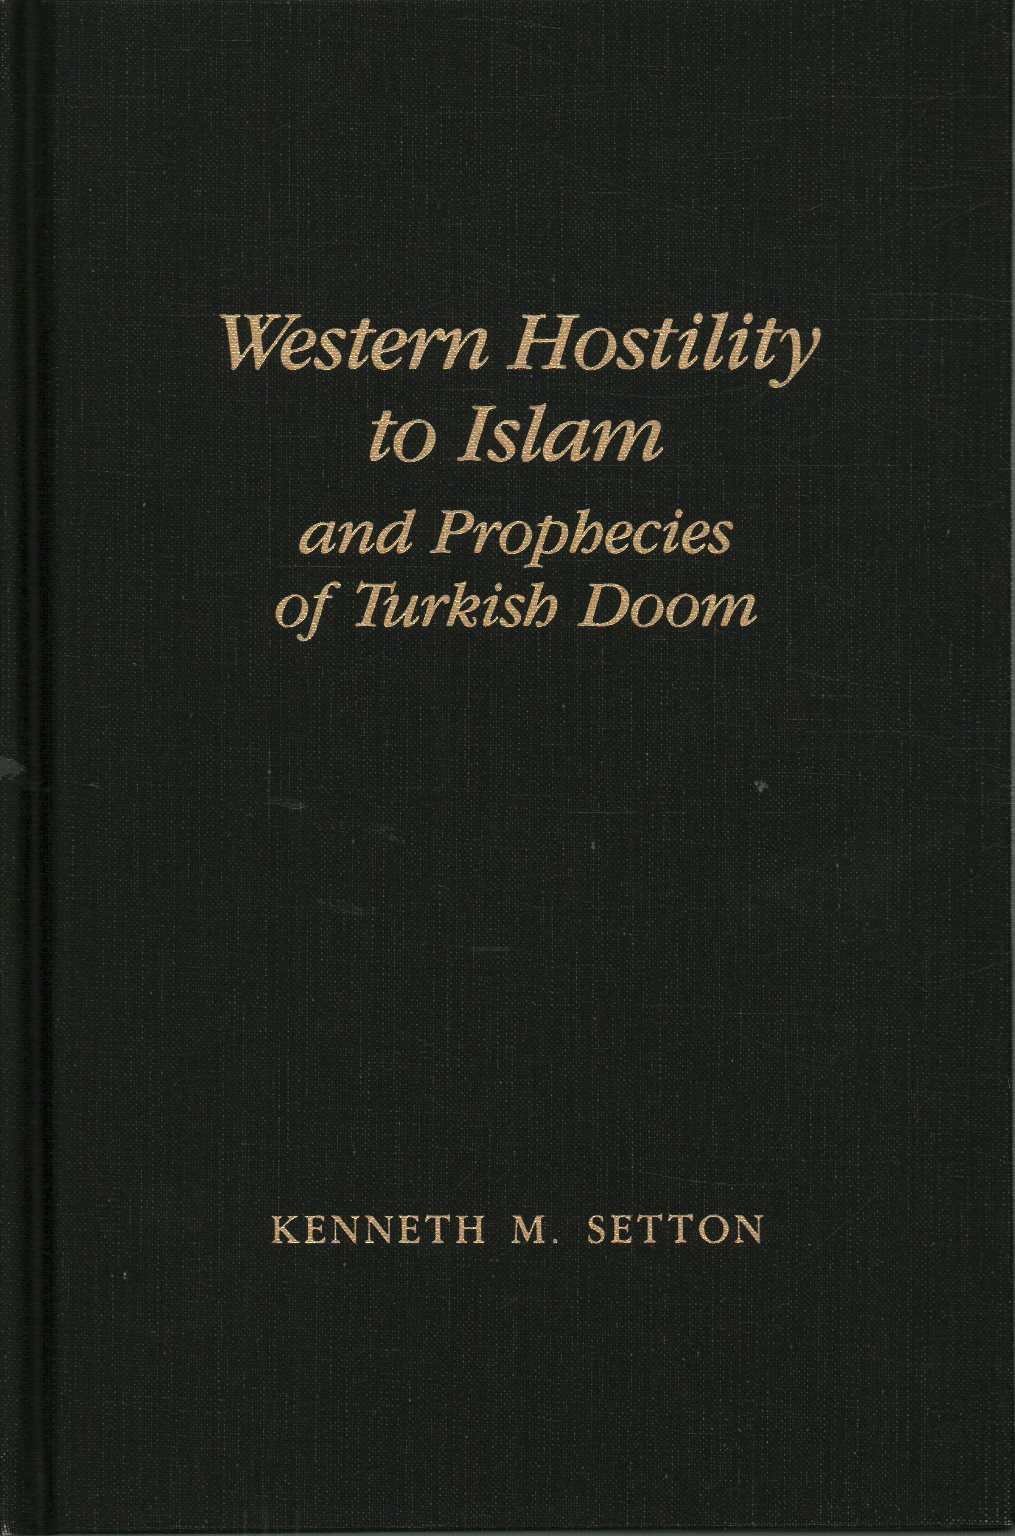 Western Hostility to Islam and prophecies of Turki, Kenneth M.Setton